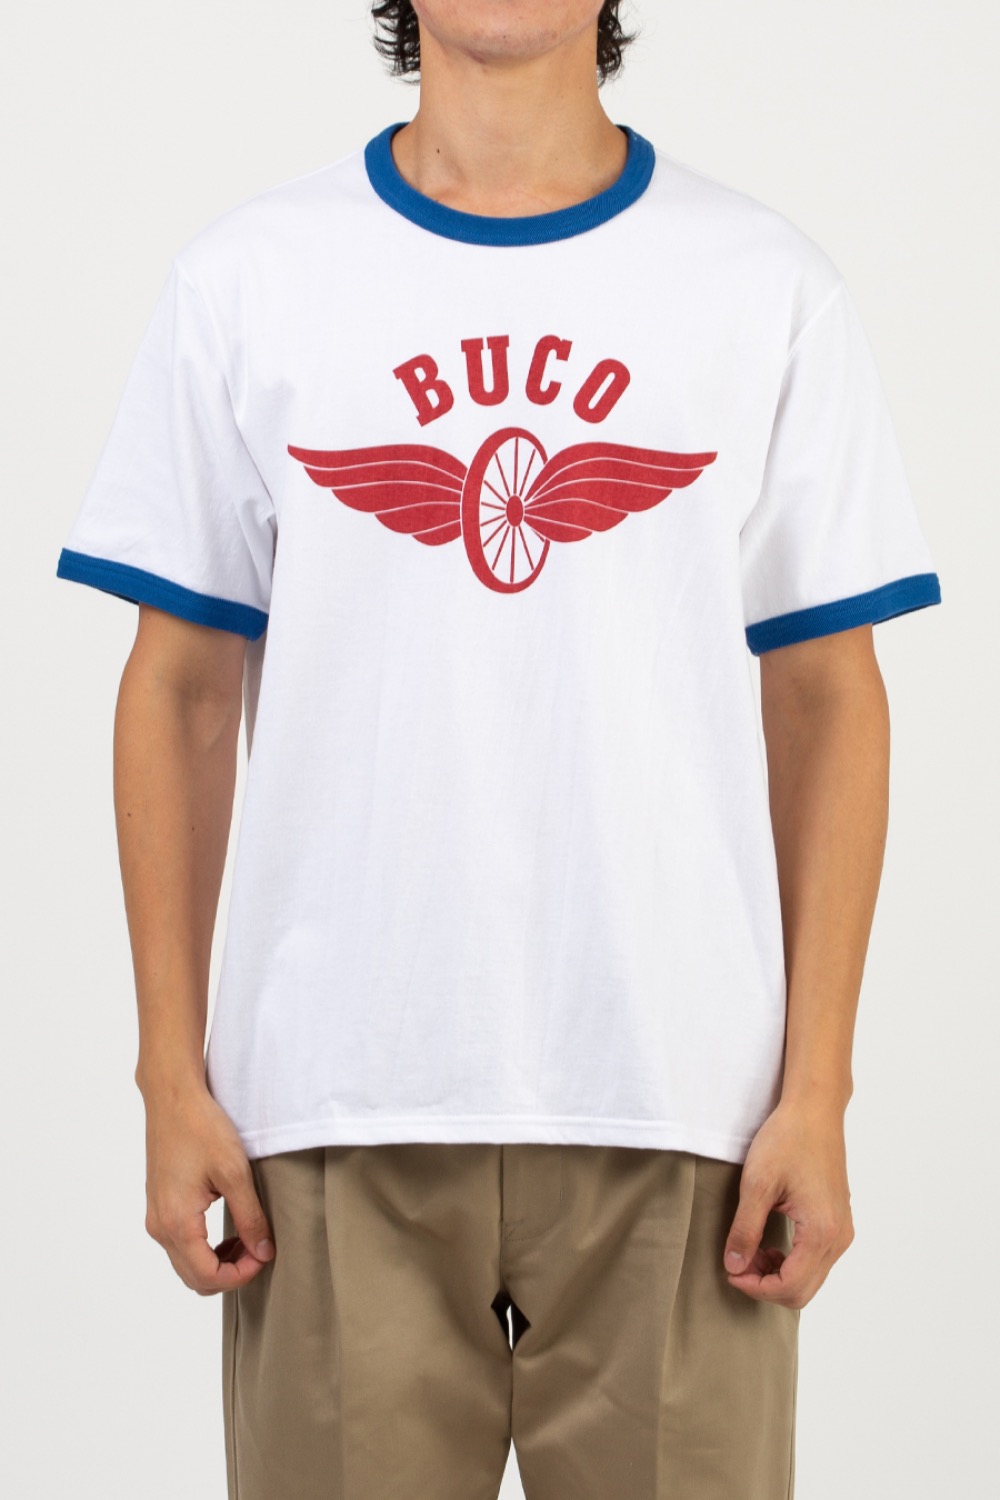 BUCO TEE / FLYING WHEEL WHITE/BLUE